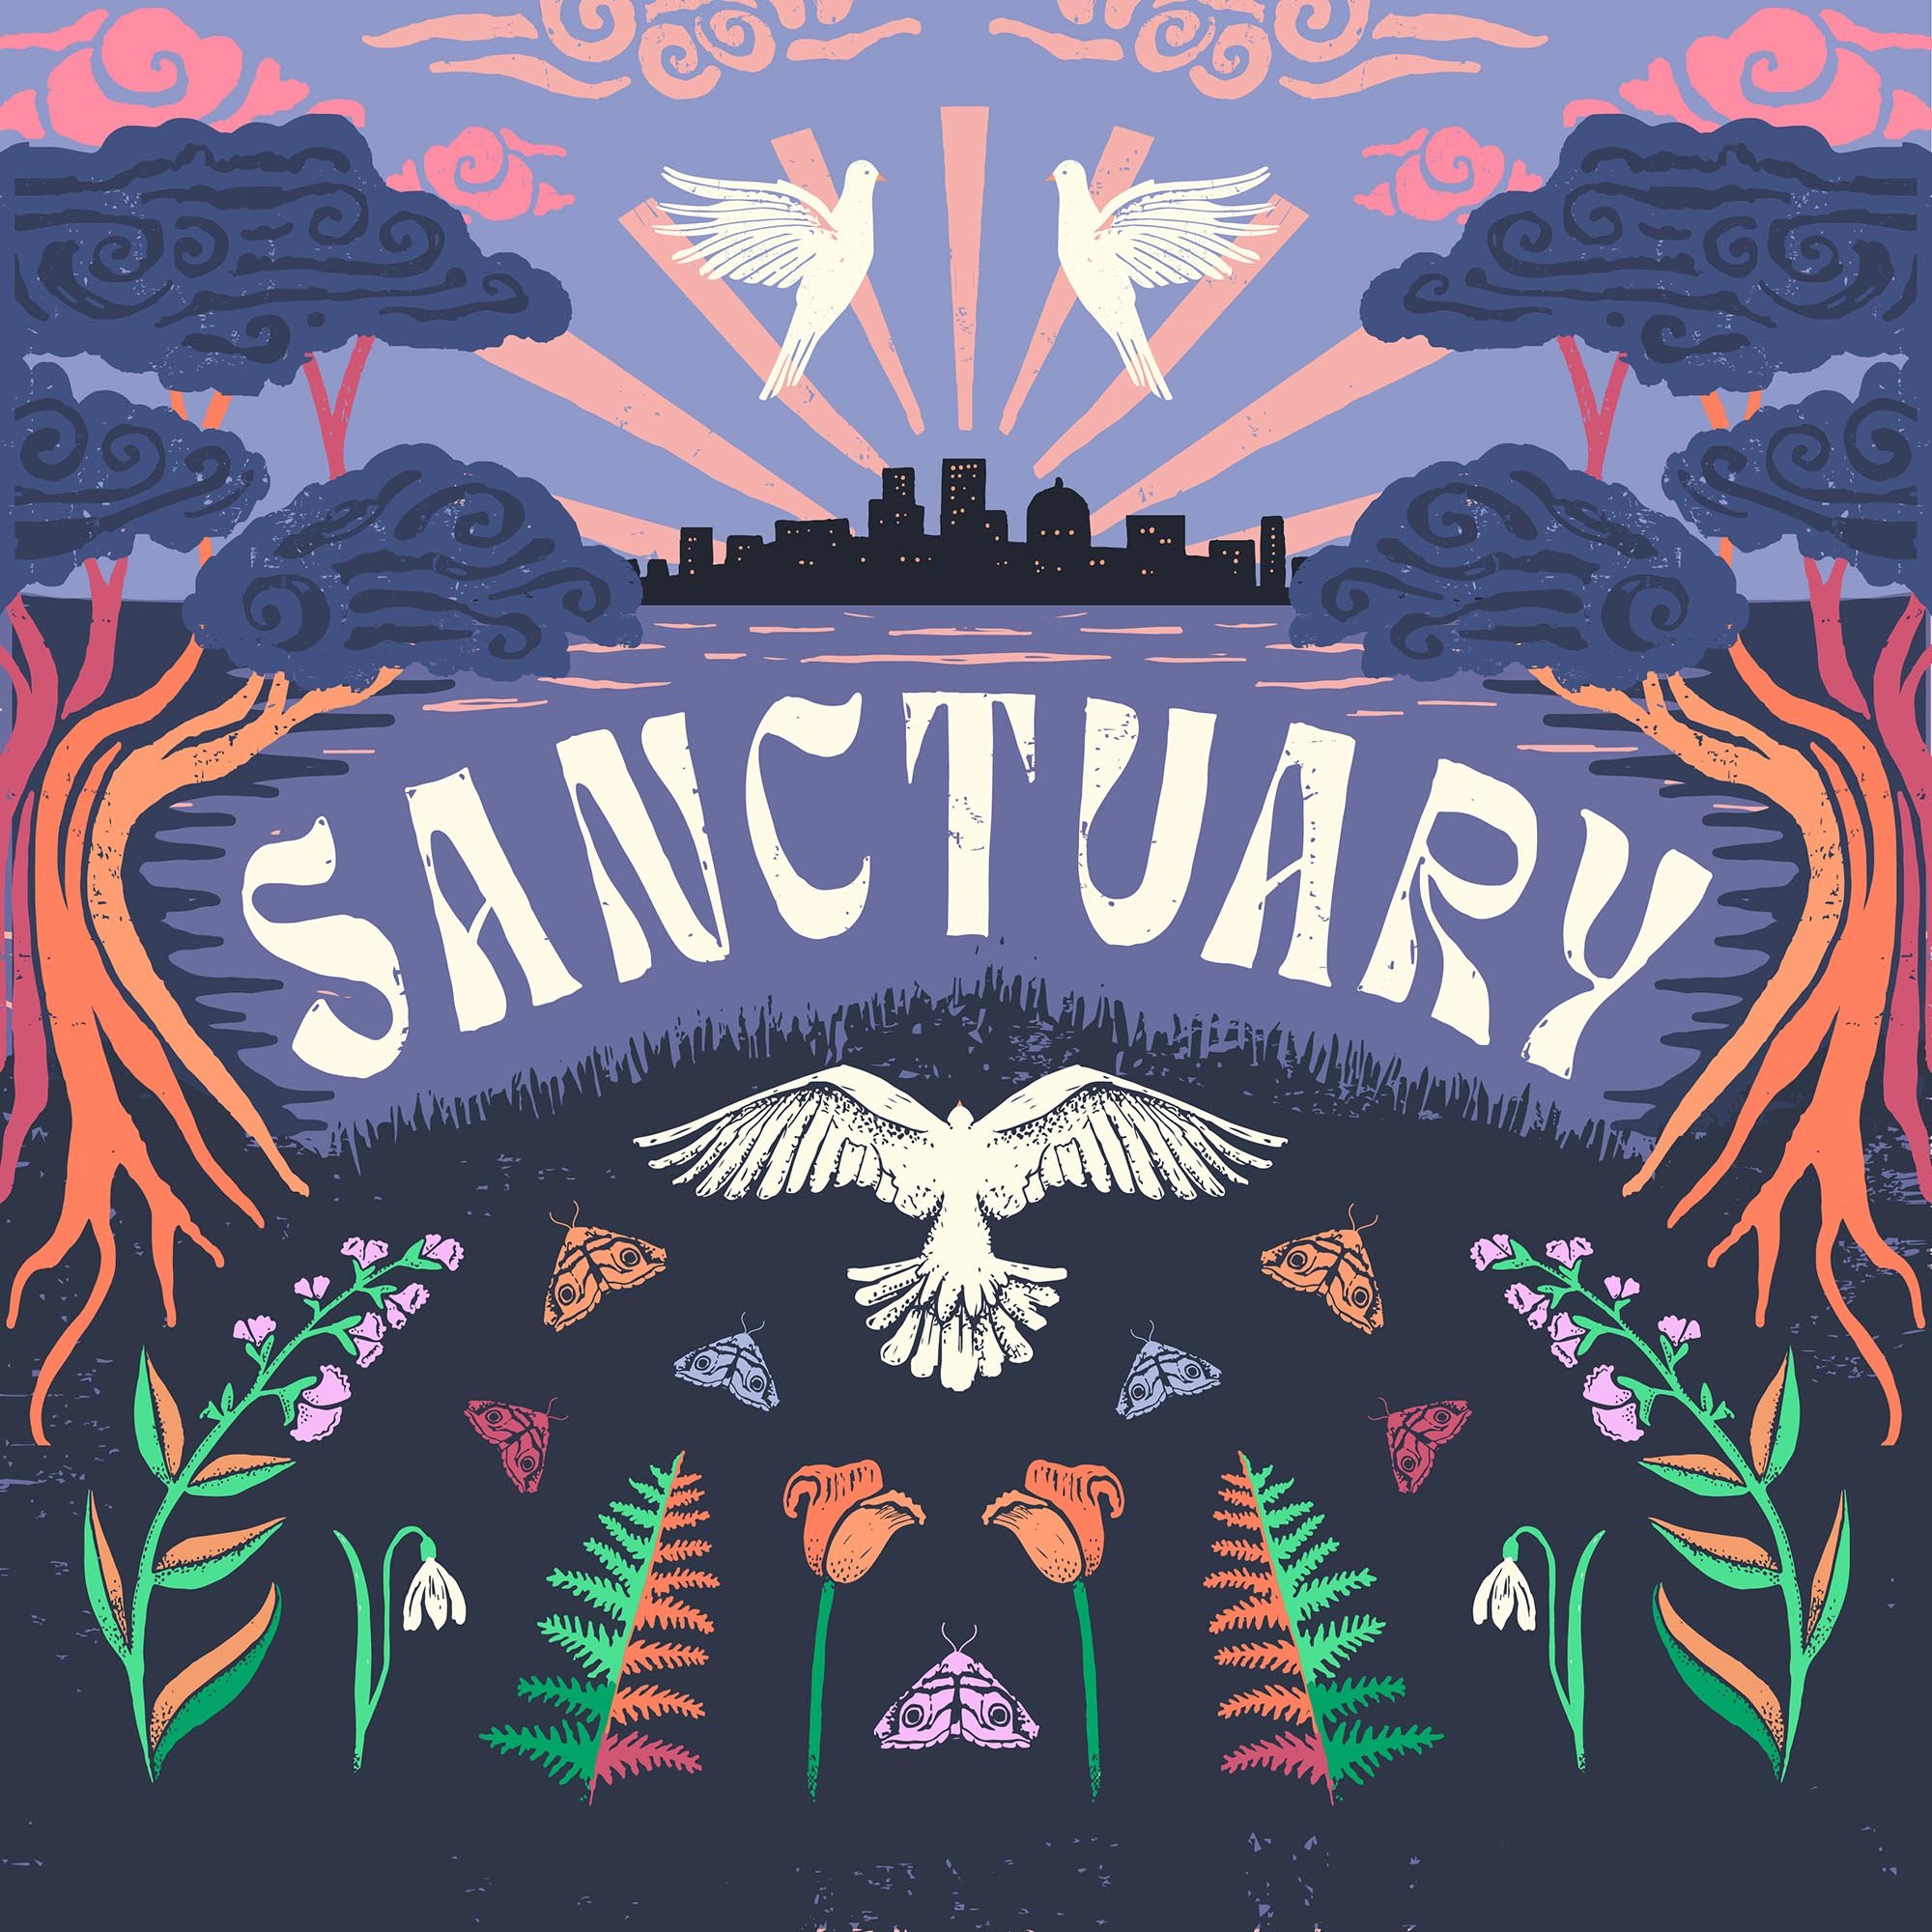 Creative+Mornings+Illustrator+Sanctuary+illustration.jpg